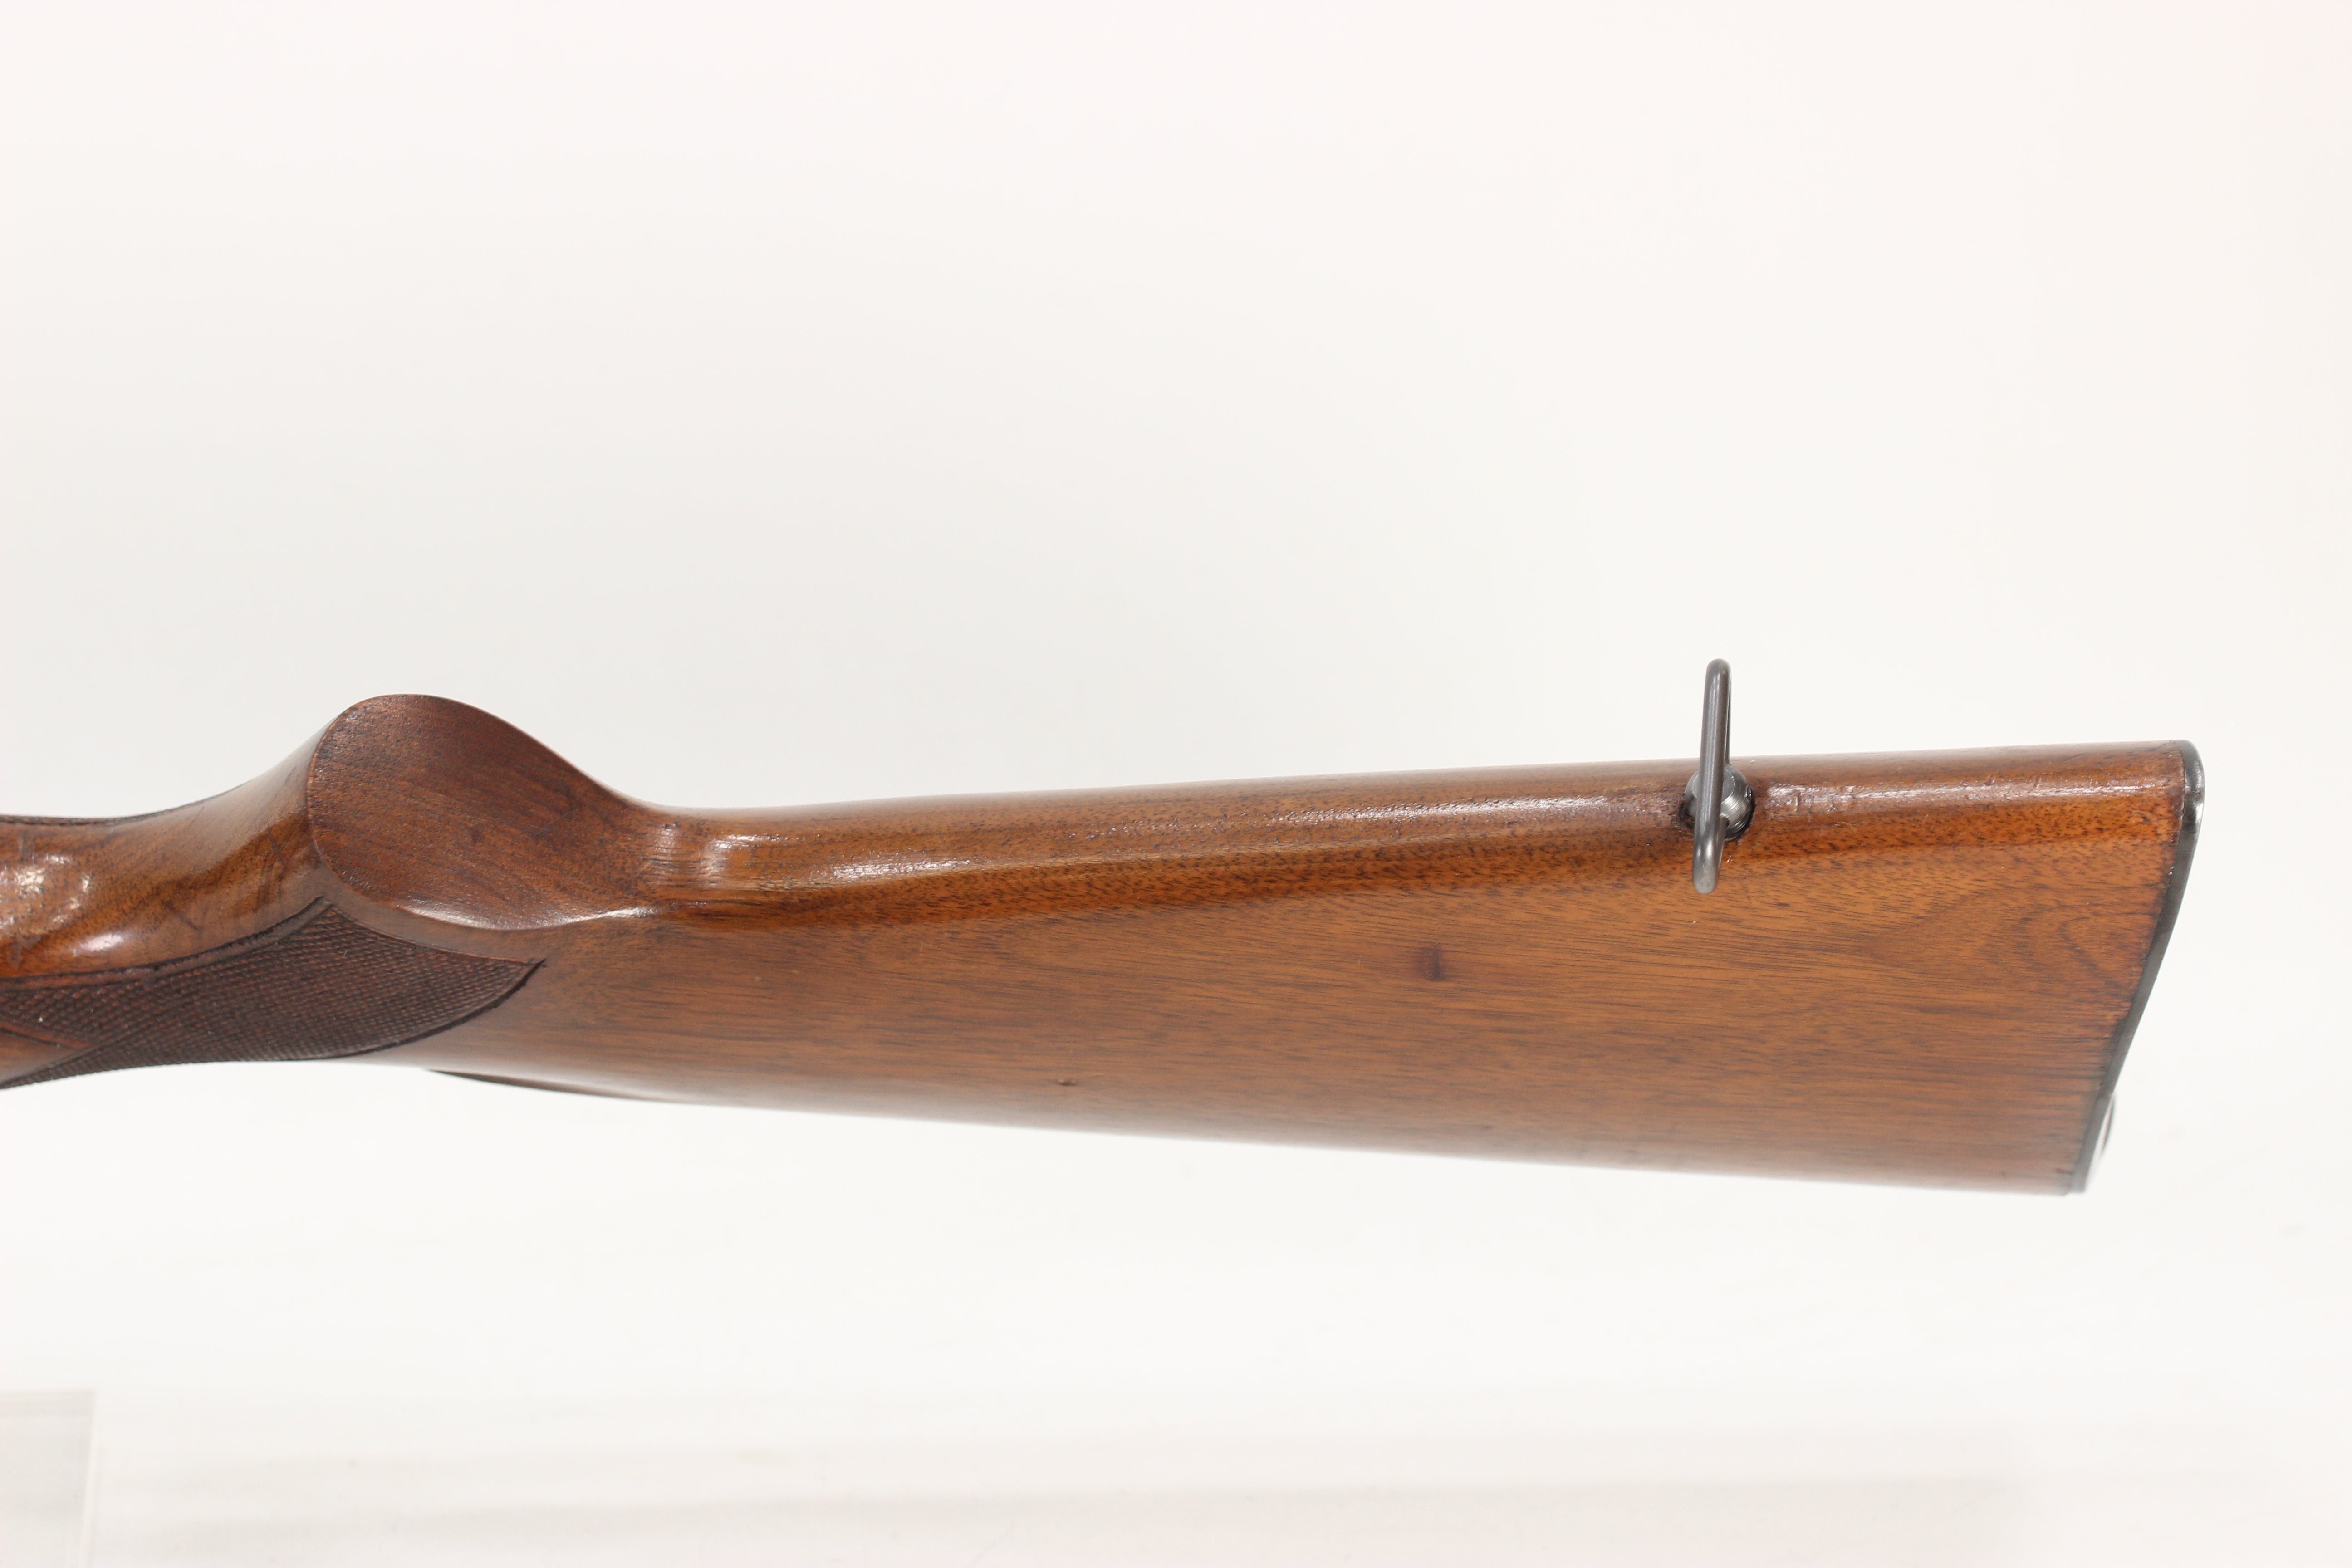 .220 Swift Standard Rifle - 1954